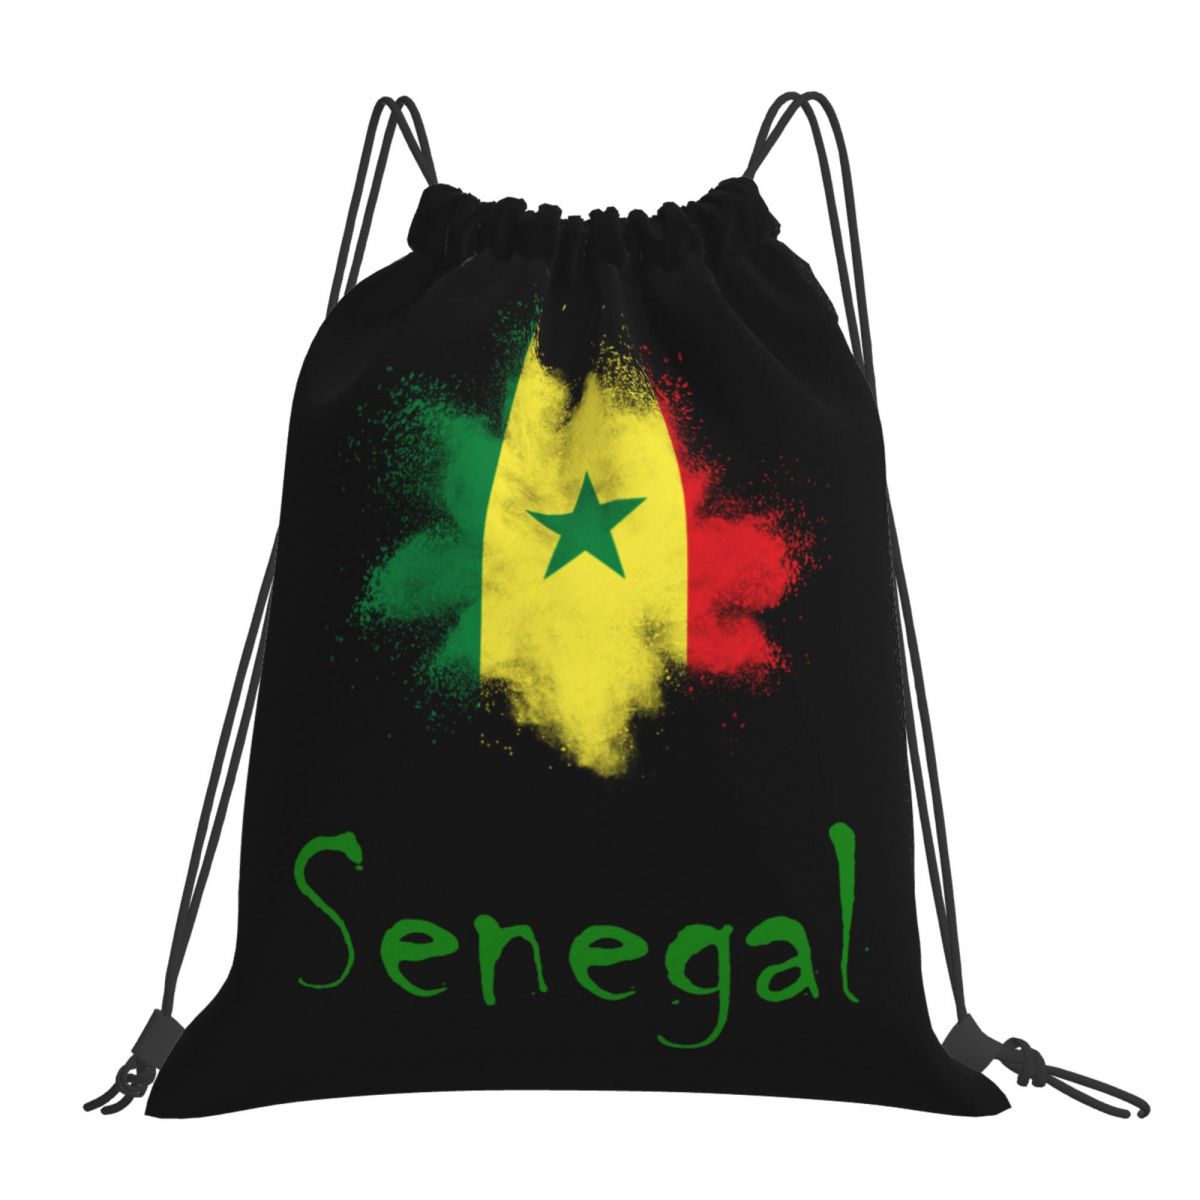 Senegal Ink Spatter Waterproof Adjustable Lightweight Gym Drawstring Bag